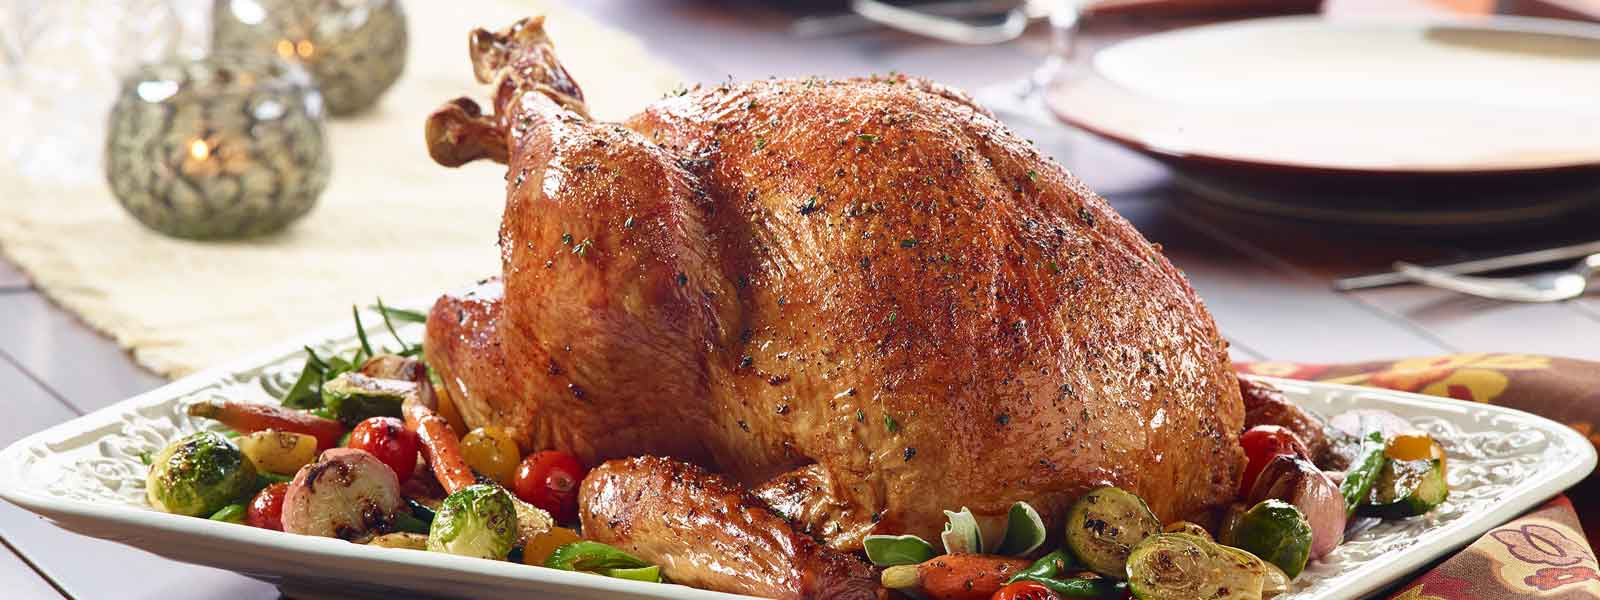 Big Green Egg Thanksgiving Turkey
 The Perfect Roasted Turkey